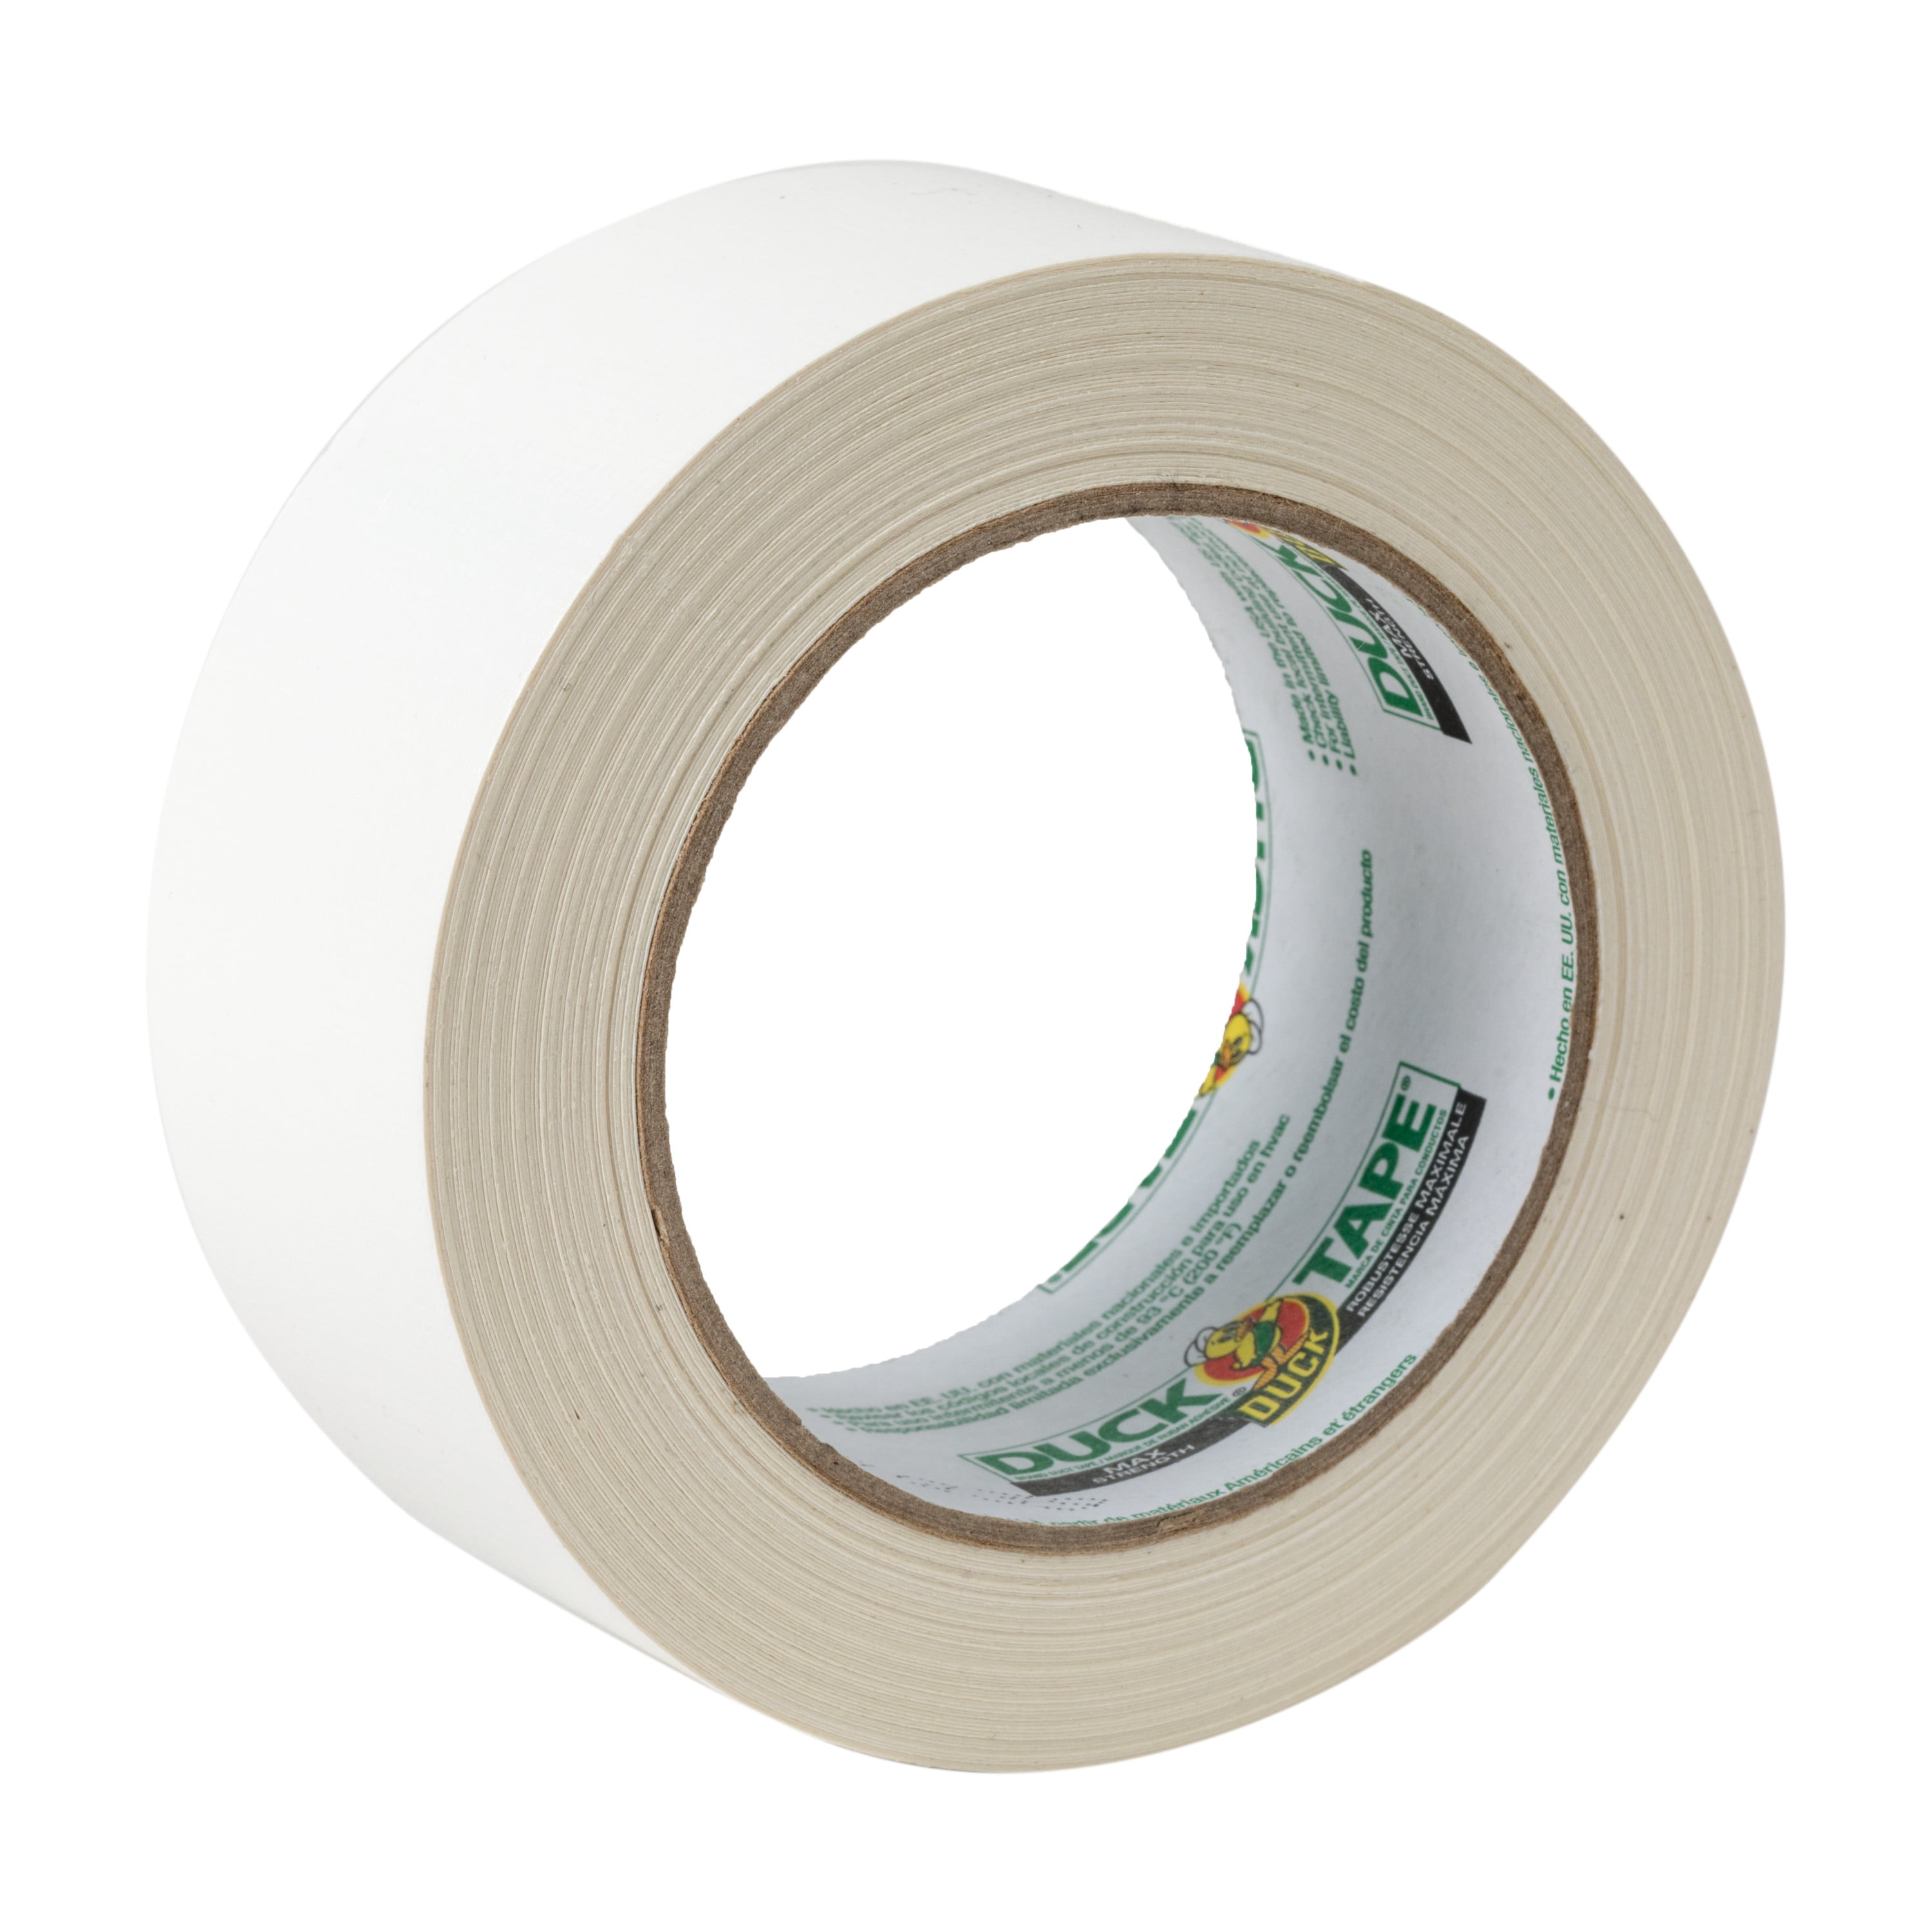 Duck 50mm x 25m Original Cloth Tape - White - Masking Tape 